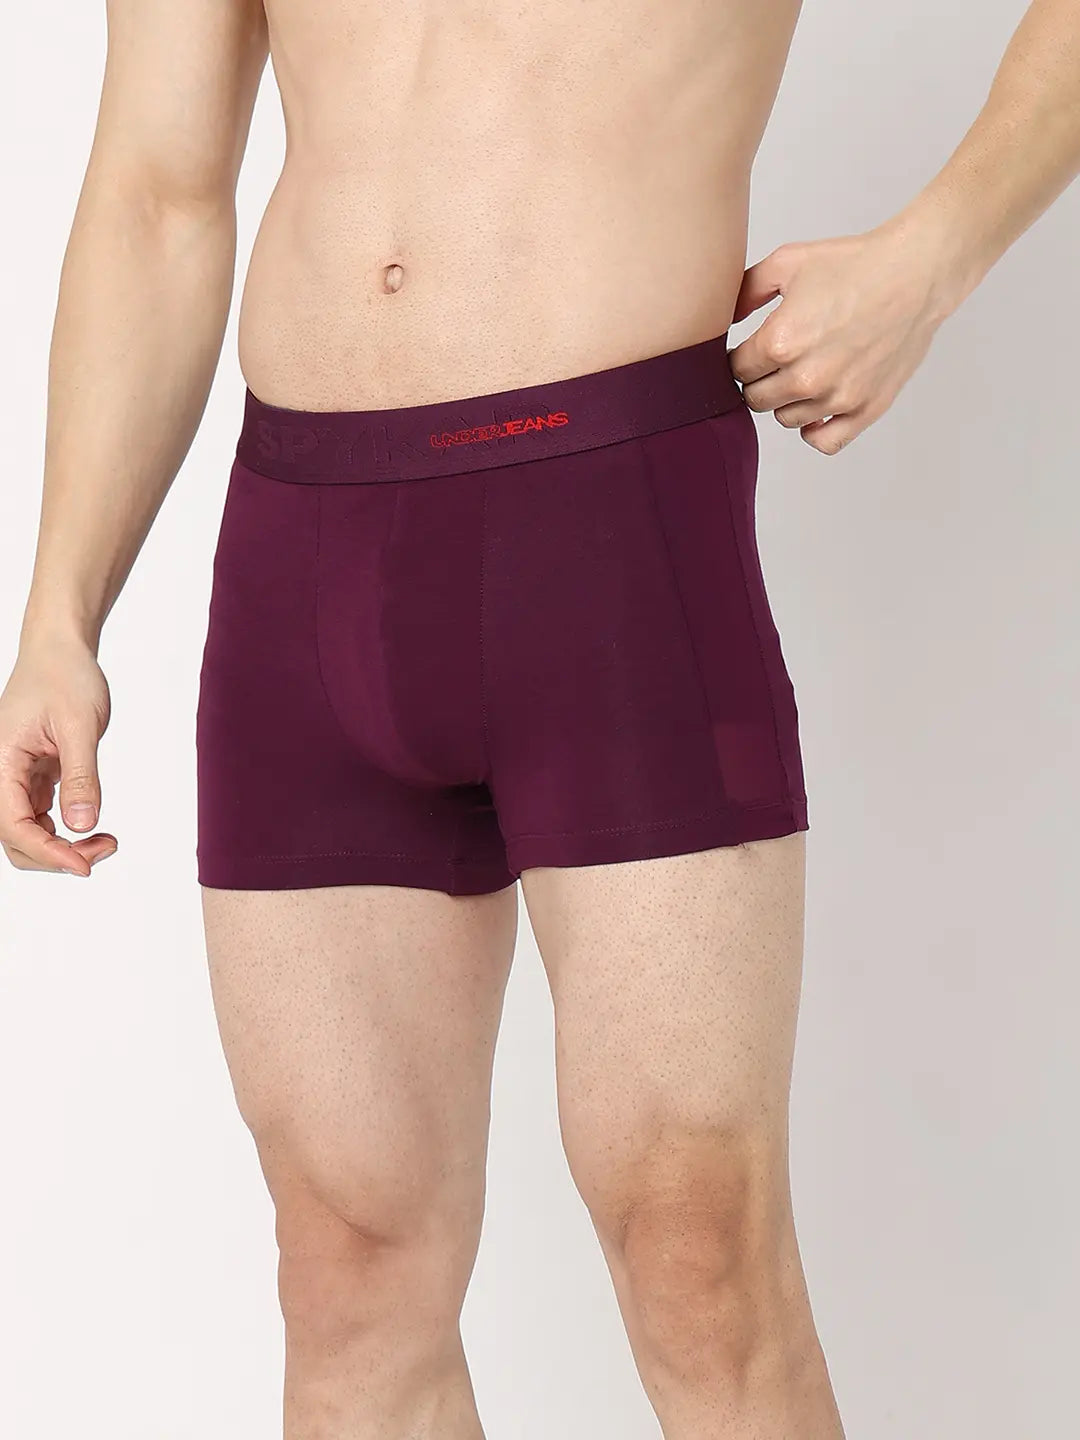 Underjeans by Spykar Men Premium Purple & White Cotton Blend Regular Fit Trunk - Pack Of 2